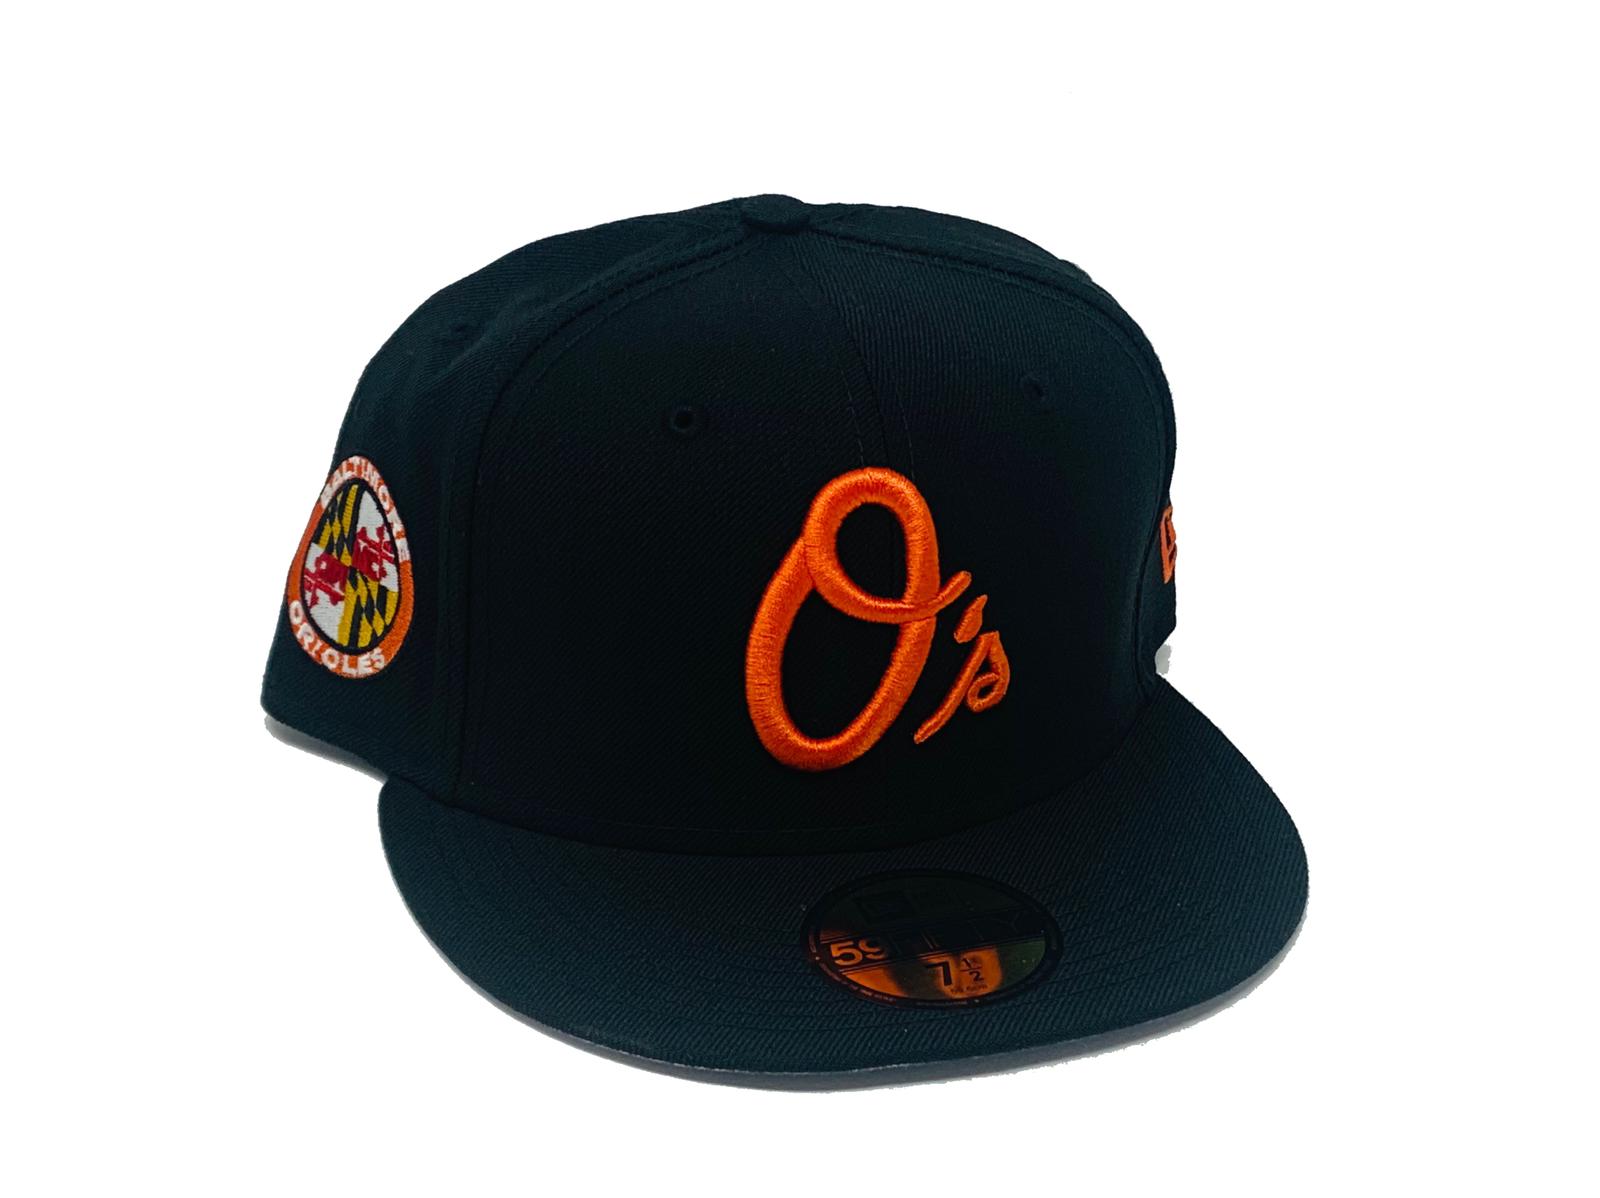  Adult FLAT BRIM Baltimore Orioles Home Wht/Blk/Orng Hat Cap MLB  Adjustable : Sports Fan Baseball Caps : Sports & Outdoors